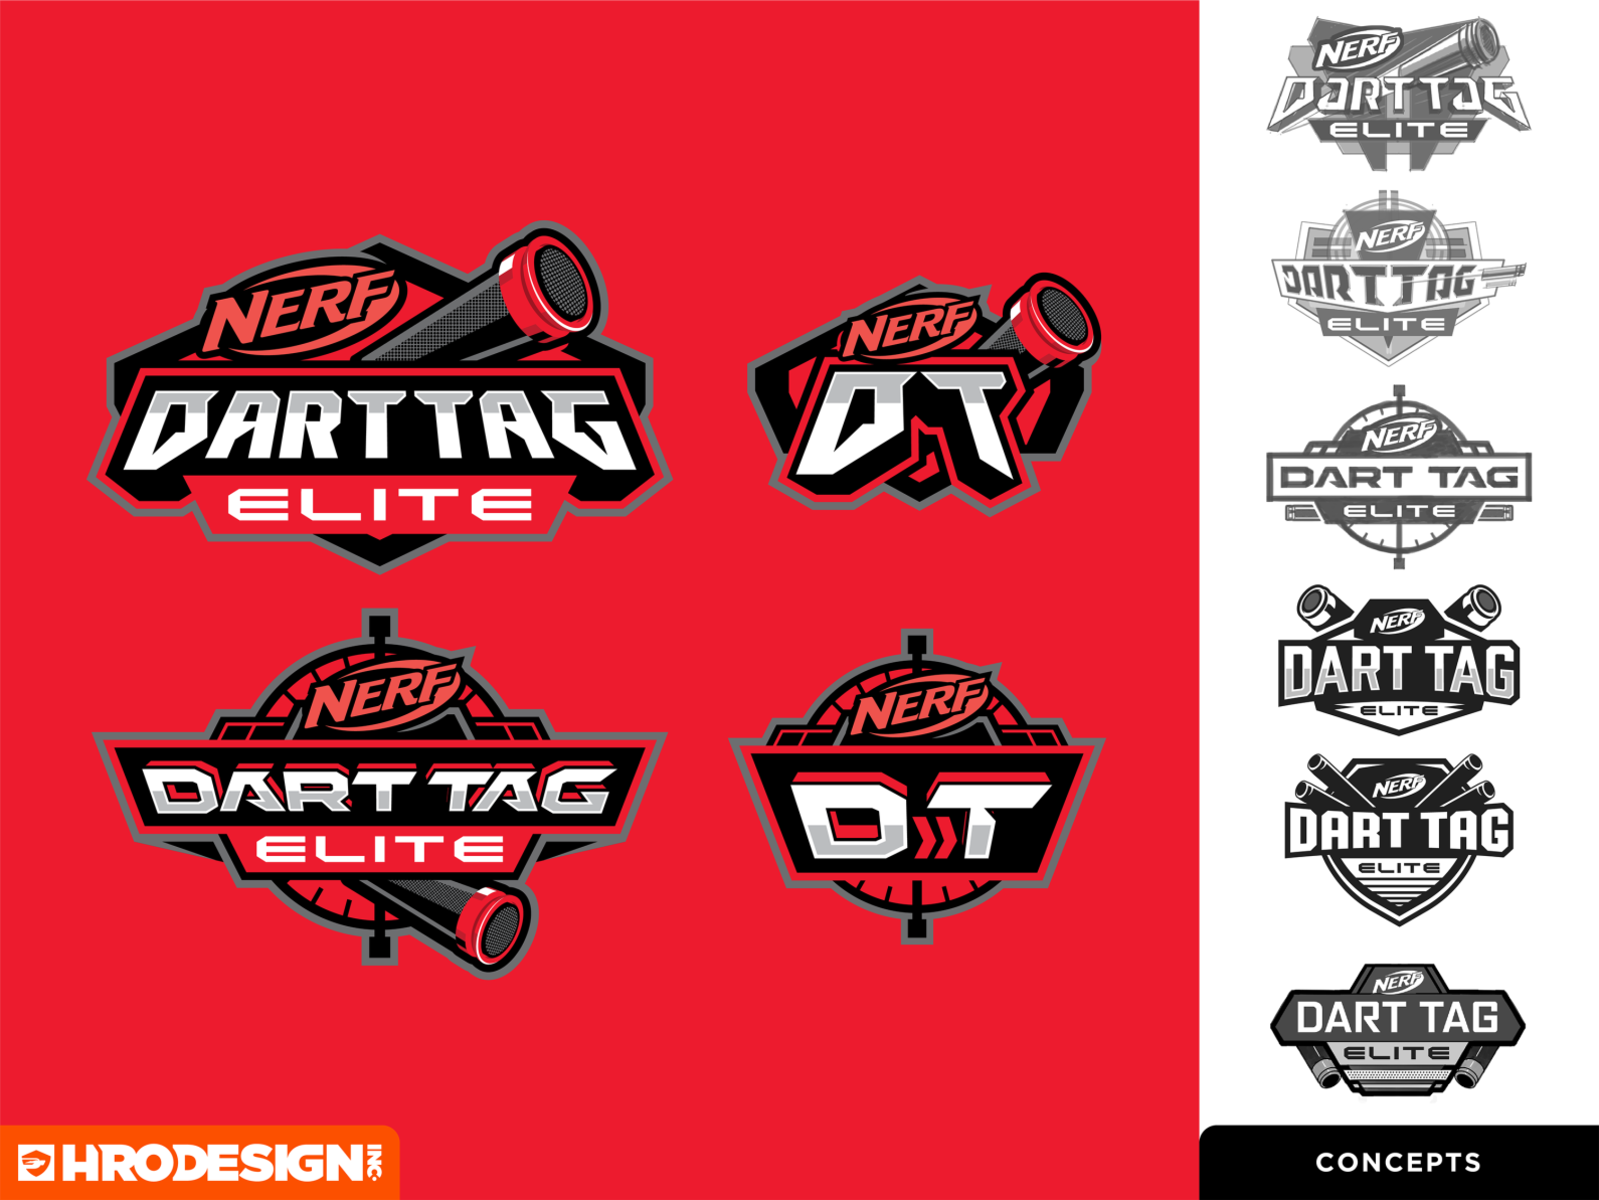 Nerf Dart Tag promo site on Behance